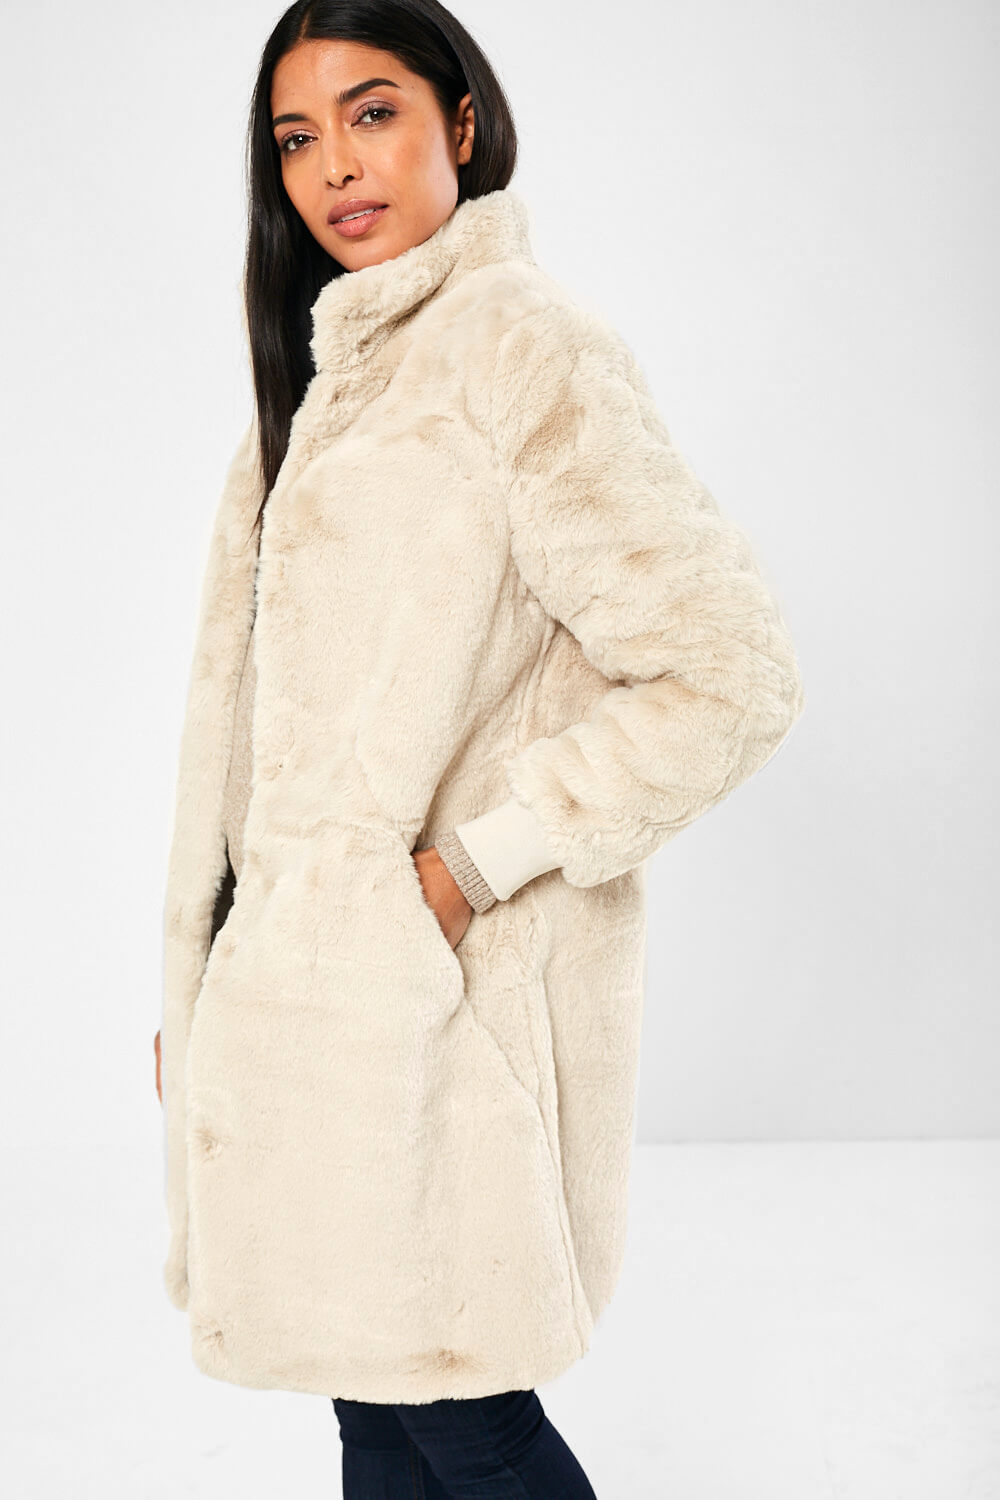 Vero Moda Vallialma Long Faux Fur in Cream | iCLOTHING - iCLOTHING